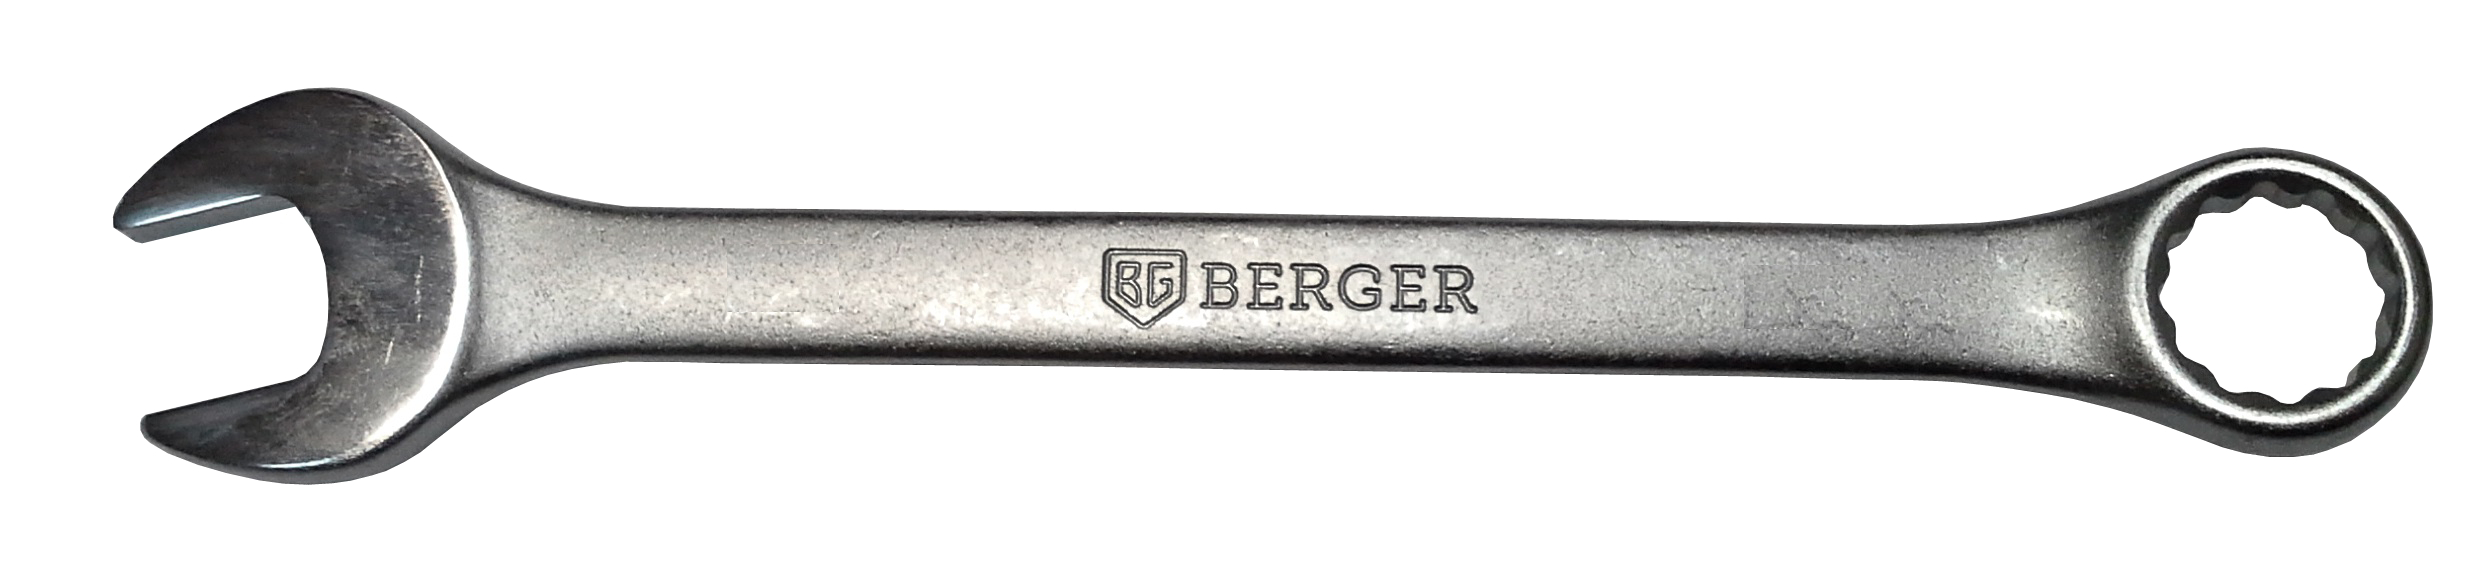 Ключ Berger Bg1138 (24 мм)